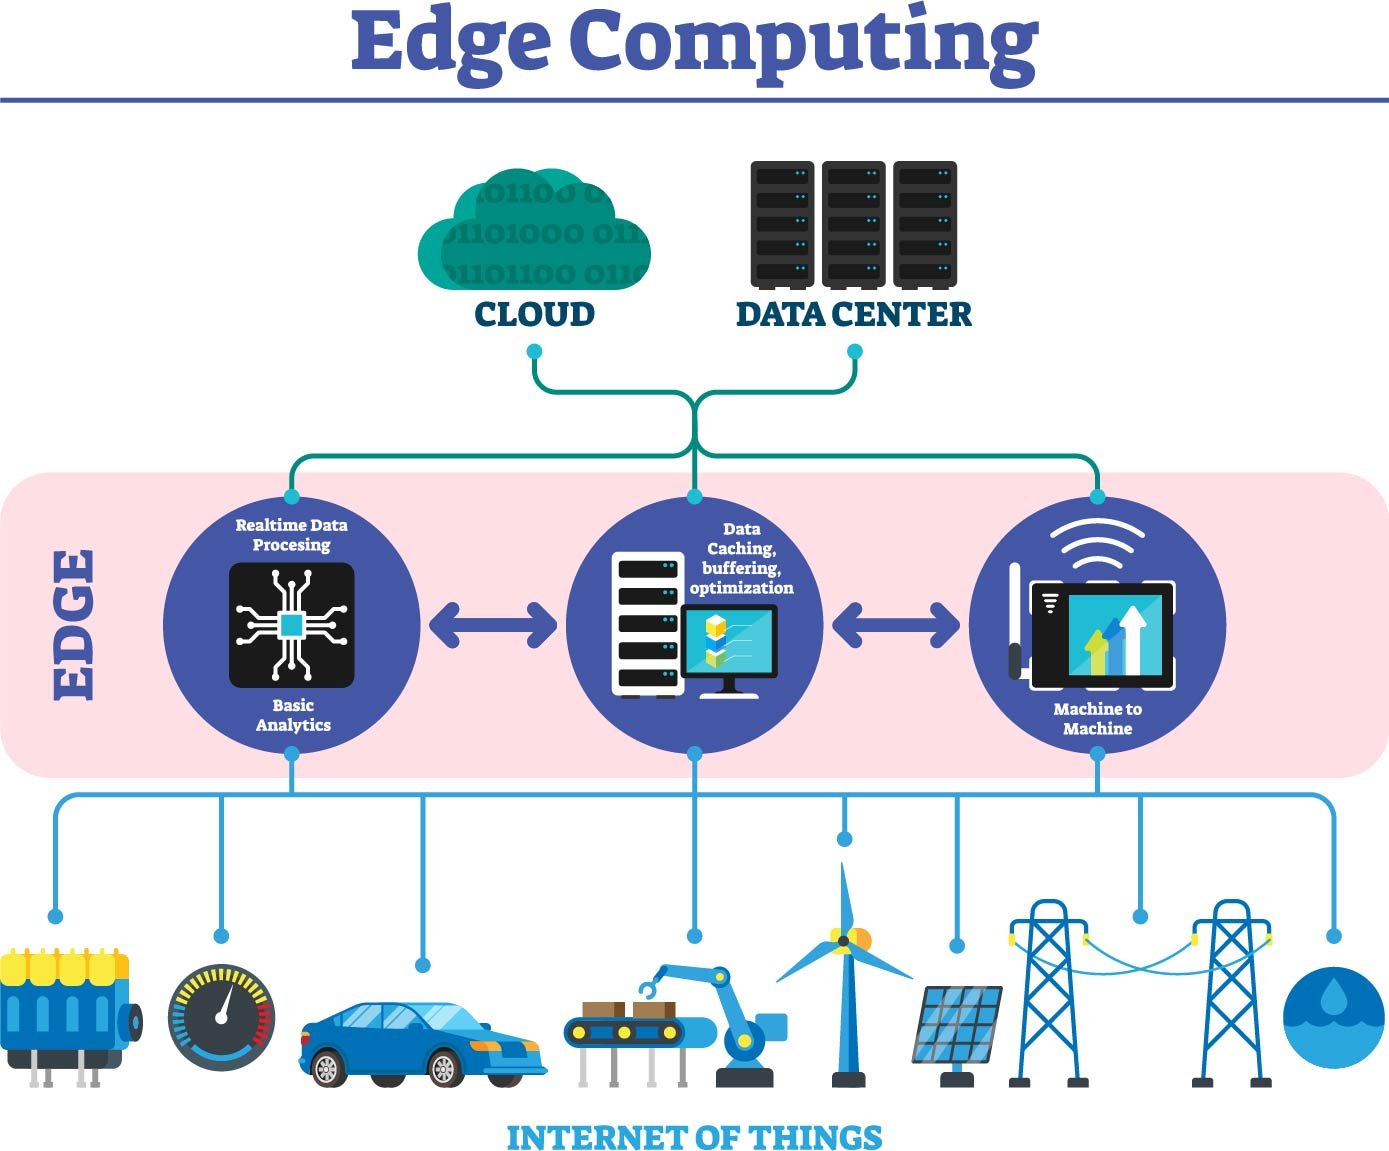 What Is Edge Computing?